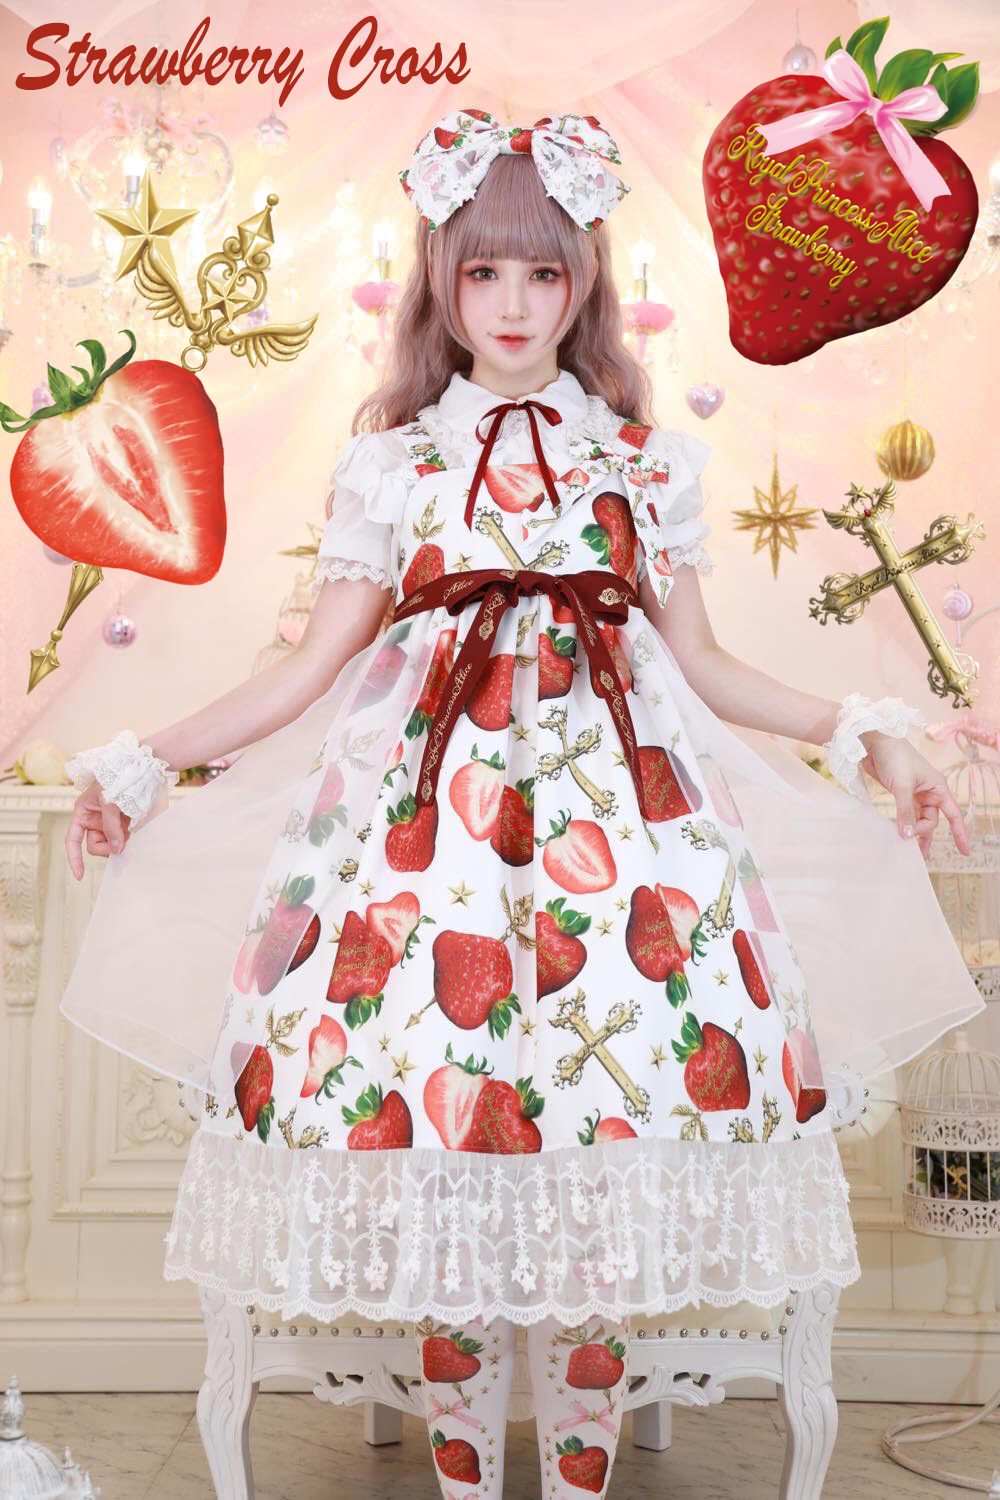 Strawberry Crossペプラムジャンパースカート(白)【即時発送】ノベルティーつき